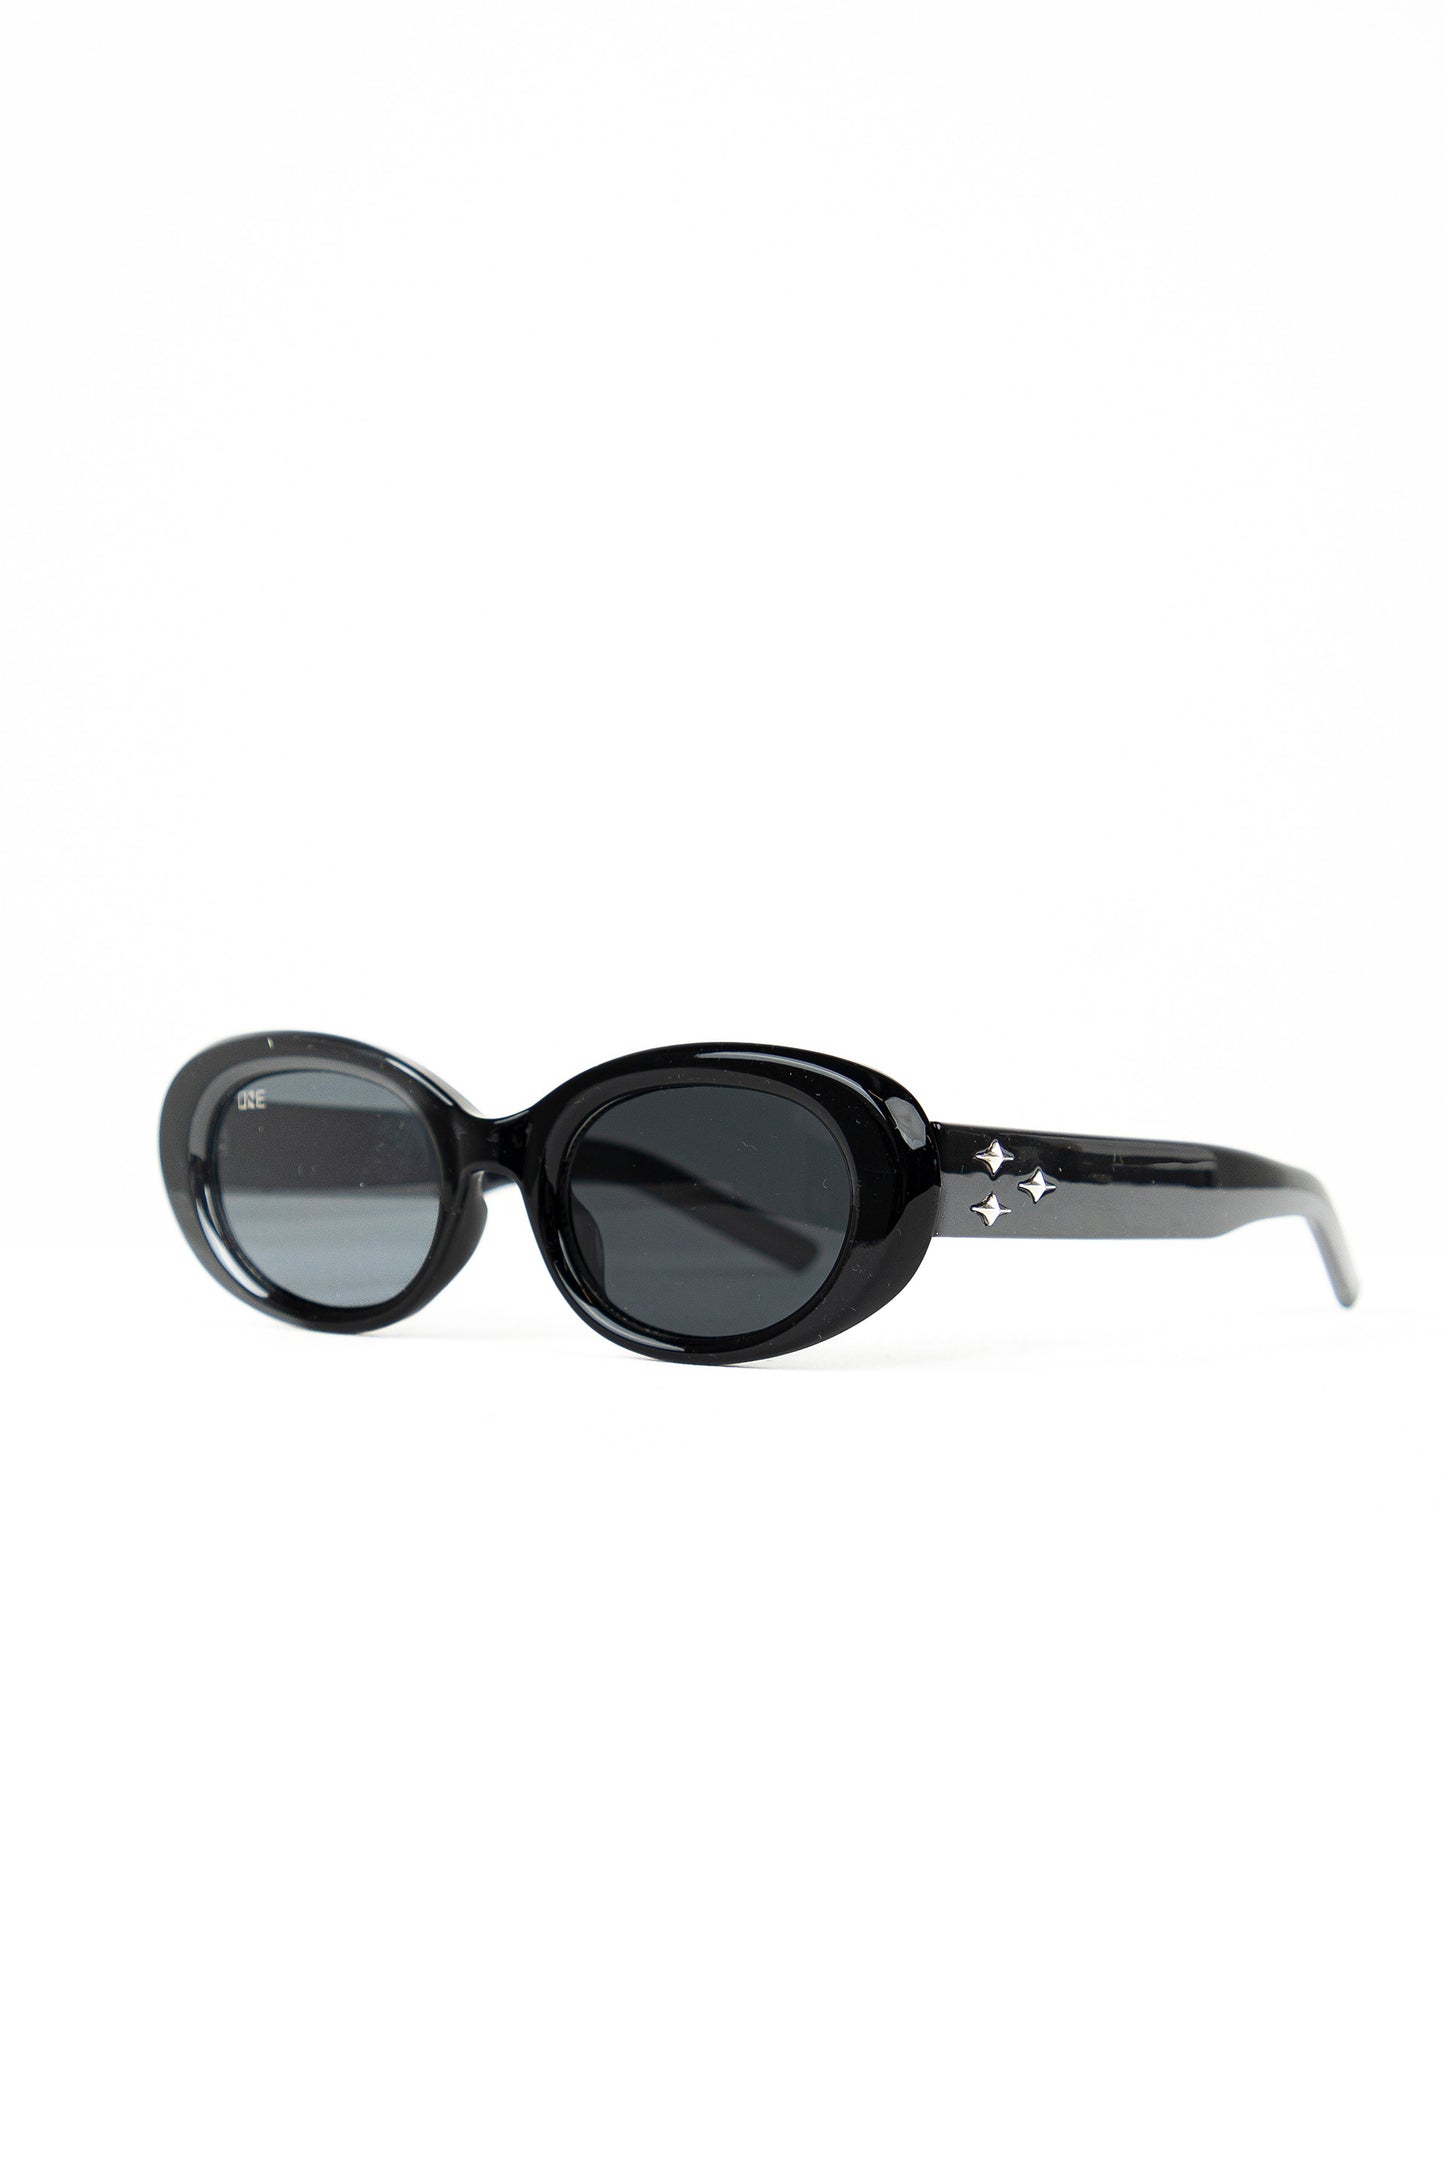 Oval Glasses Black